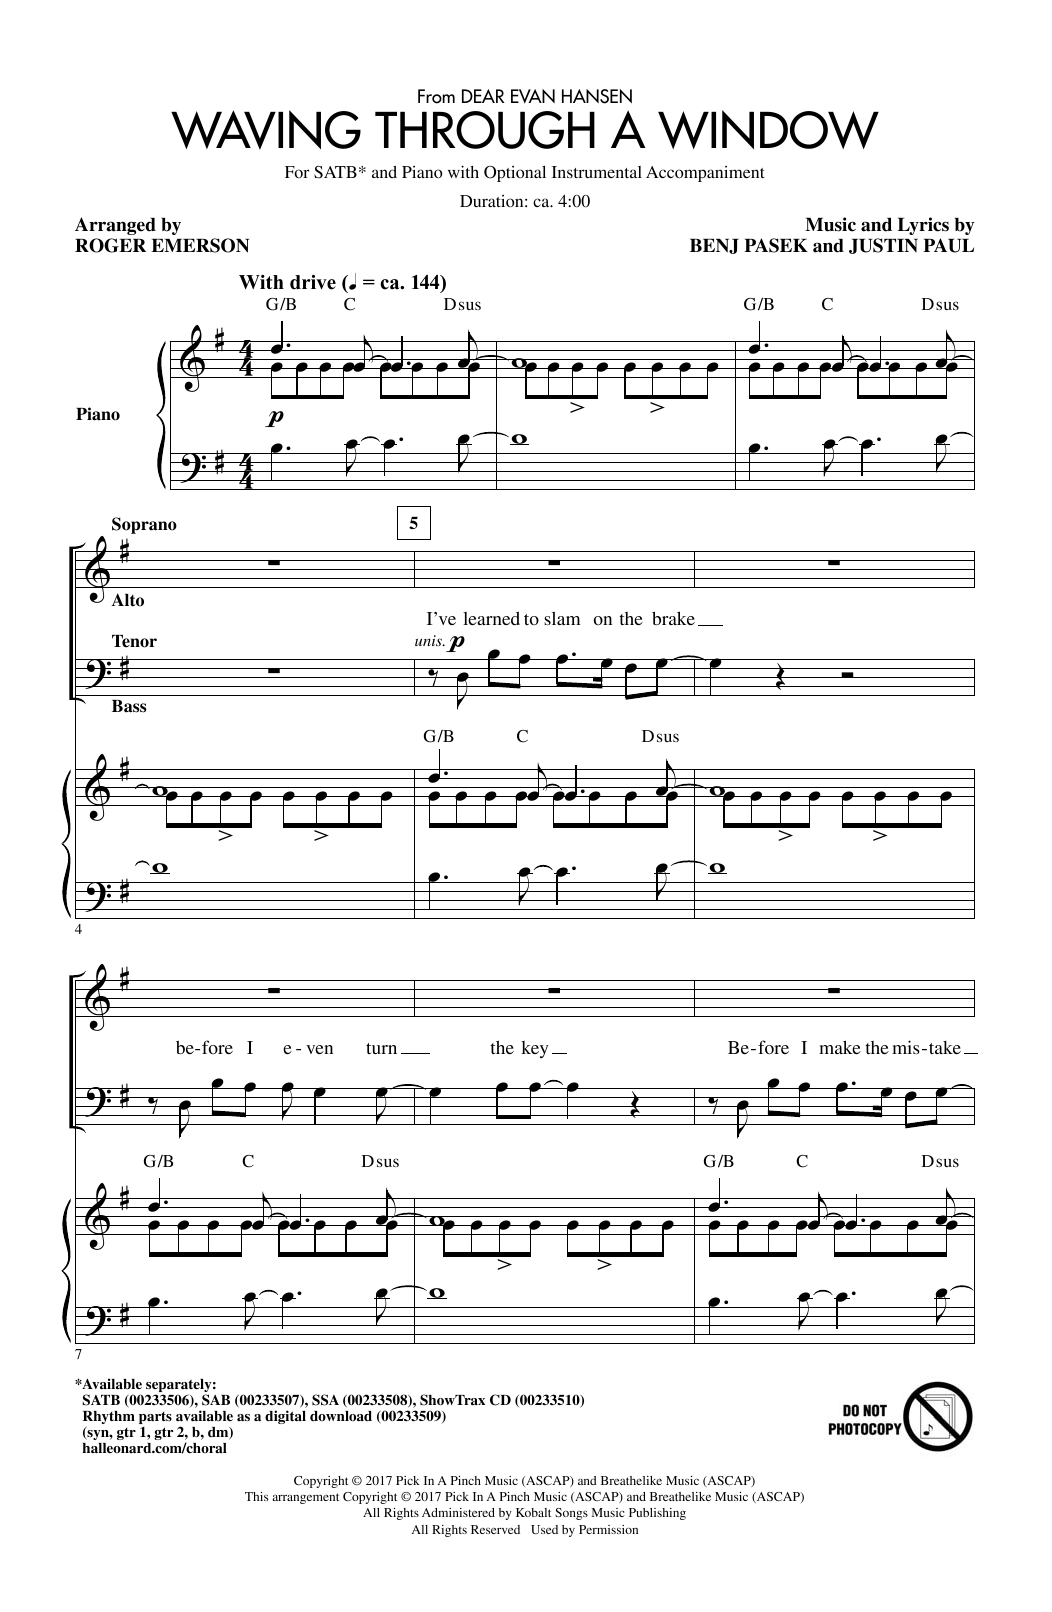 Pasek & Paul Waving Through A Window (arr. Roger Emerson) sheet music notes and chords arranged for SATB Choir